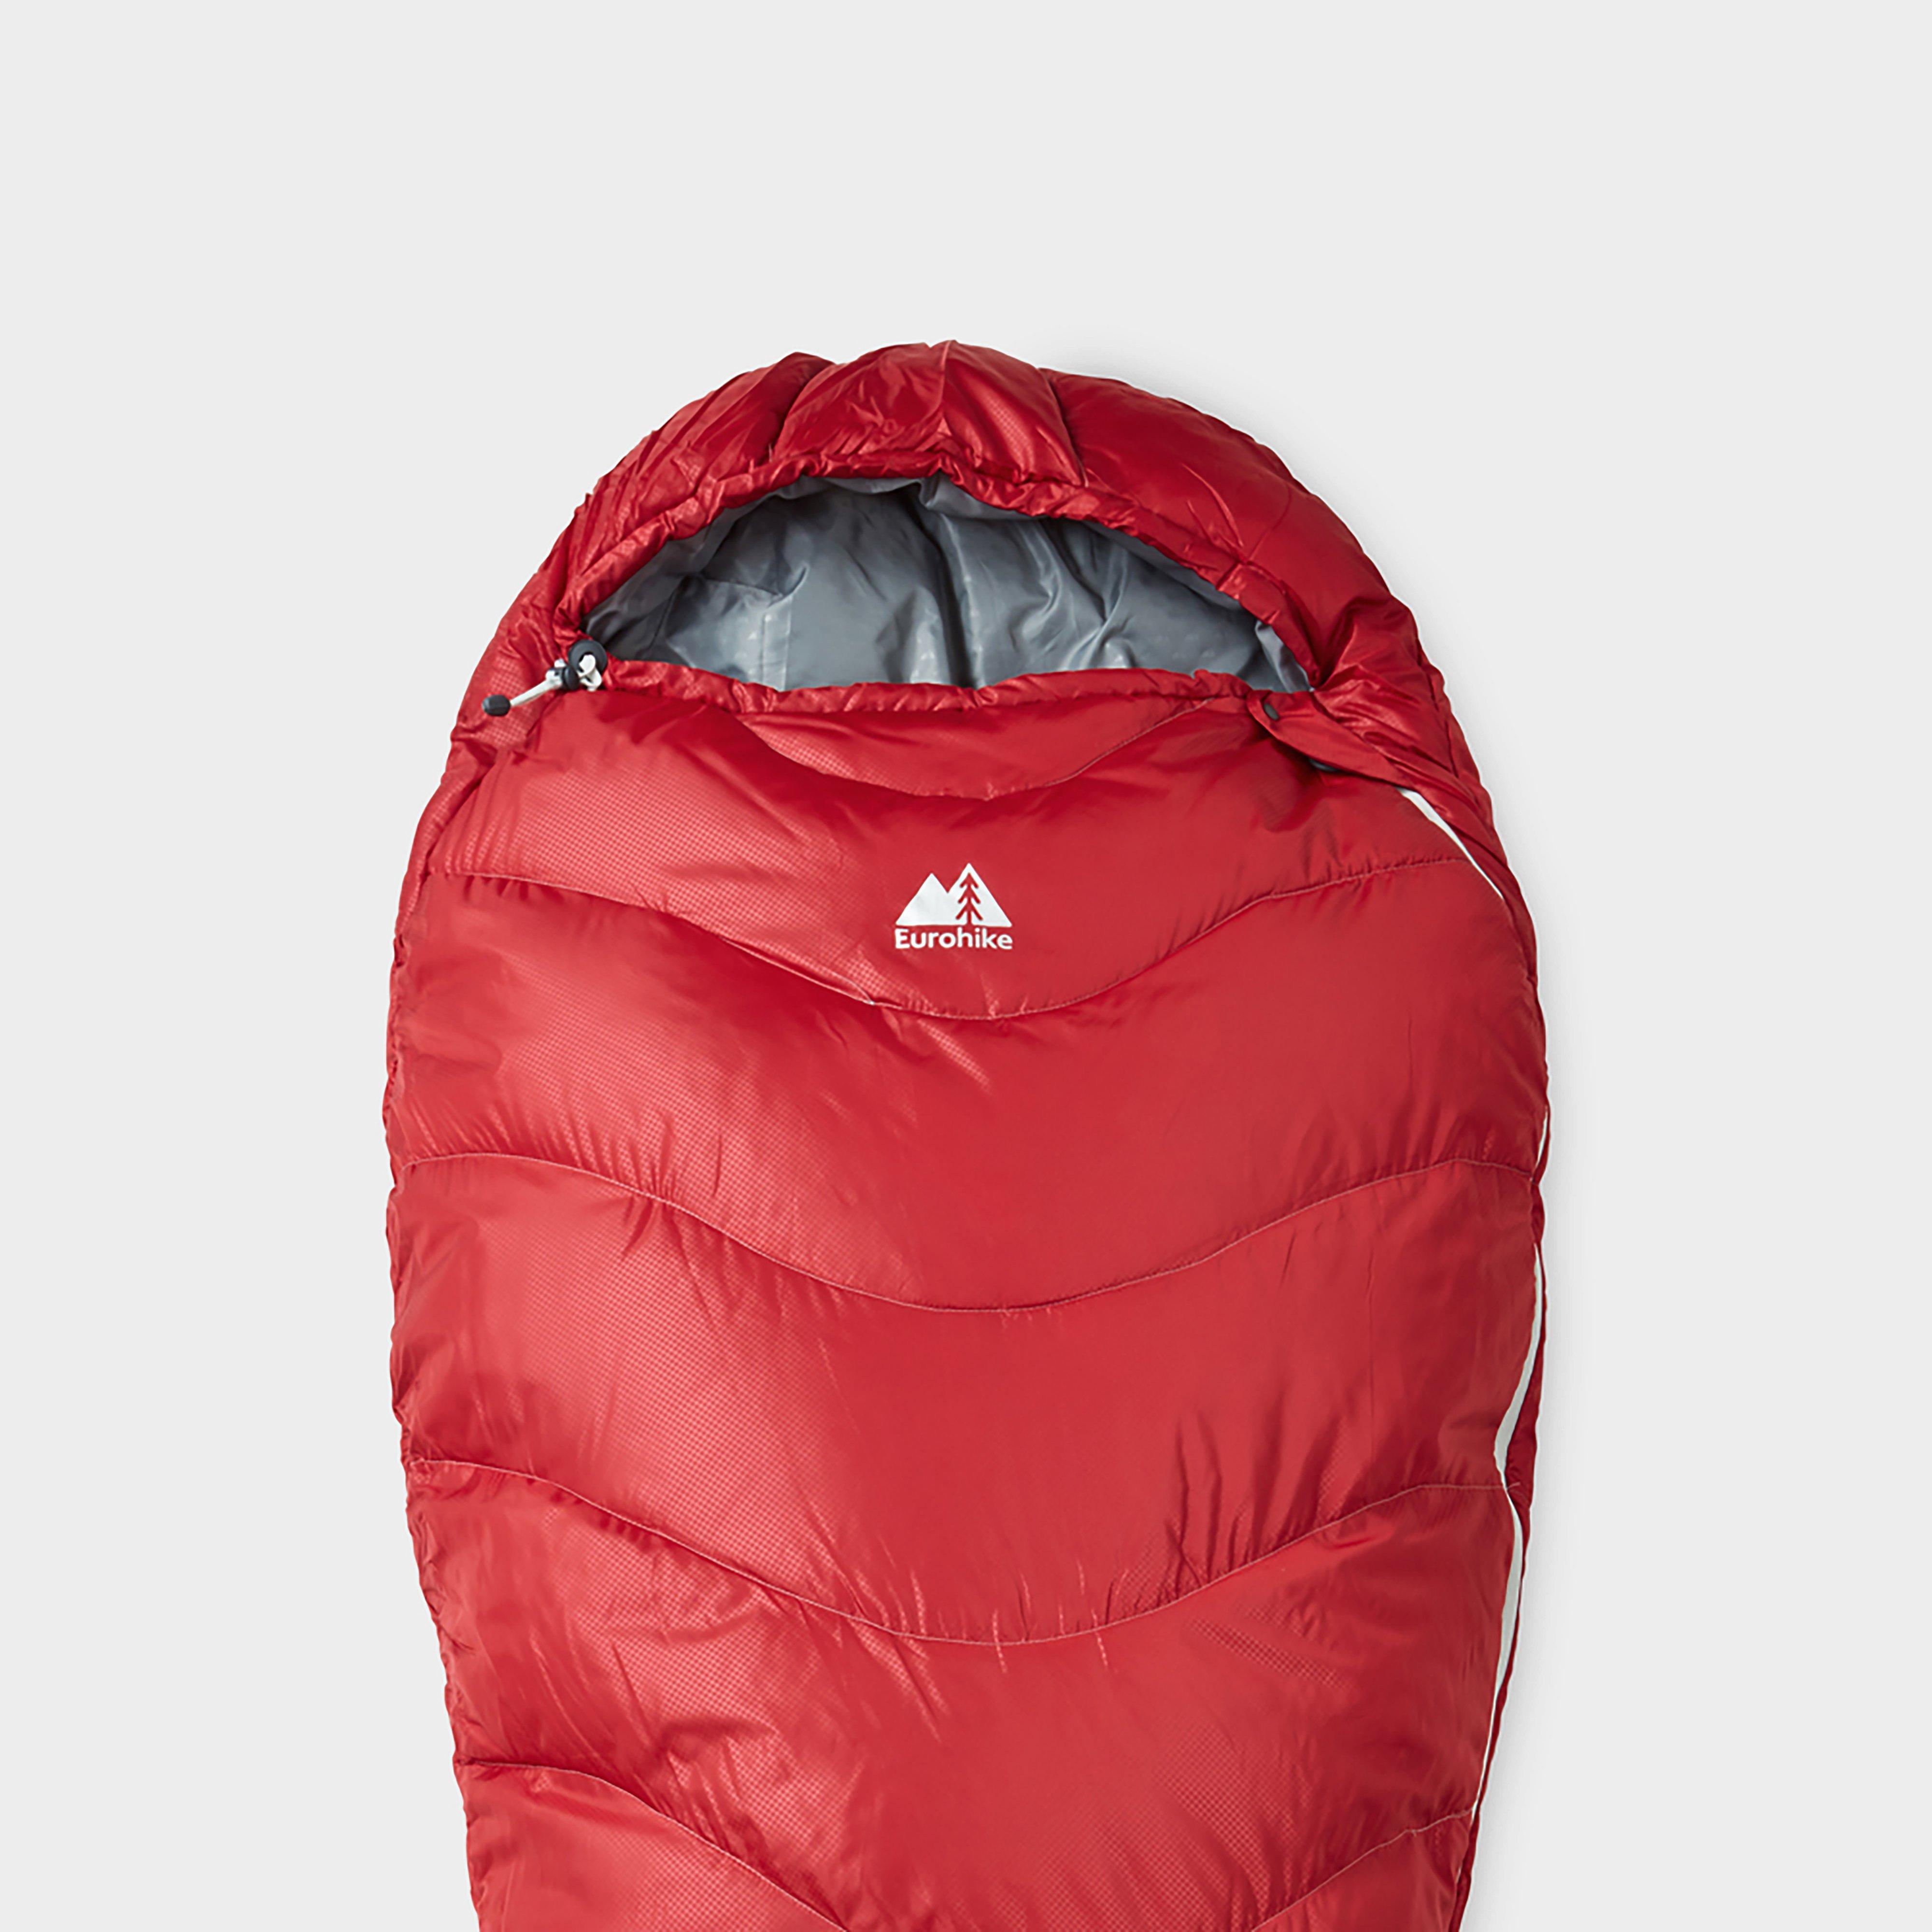 Eurohike Adventurer 200 Sleeping Bag - Red/dre  Red/dre